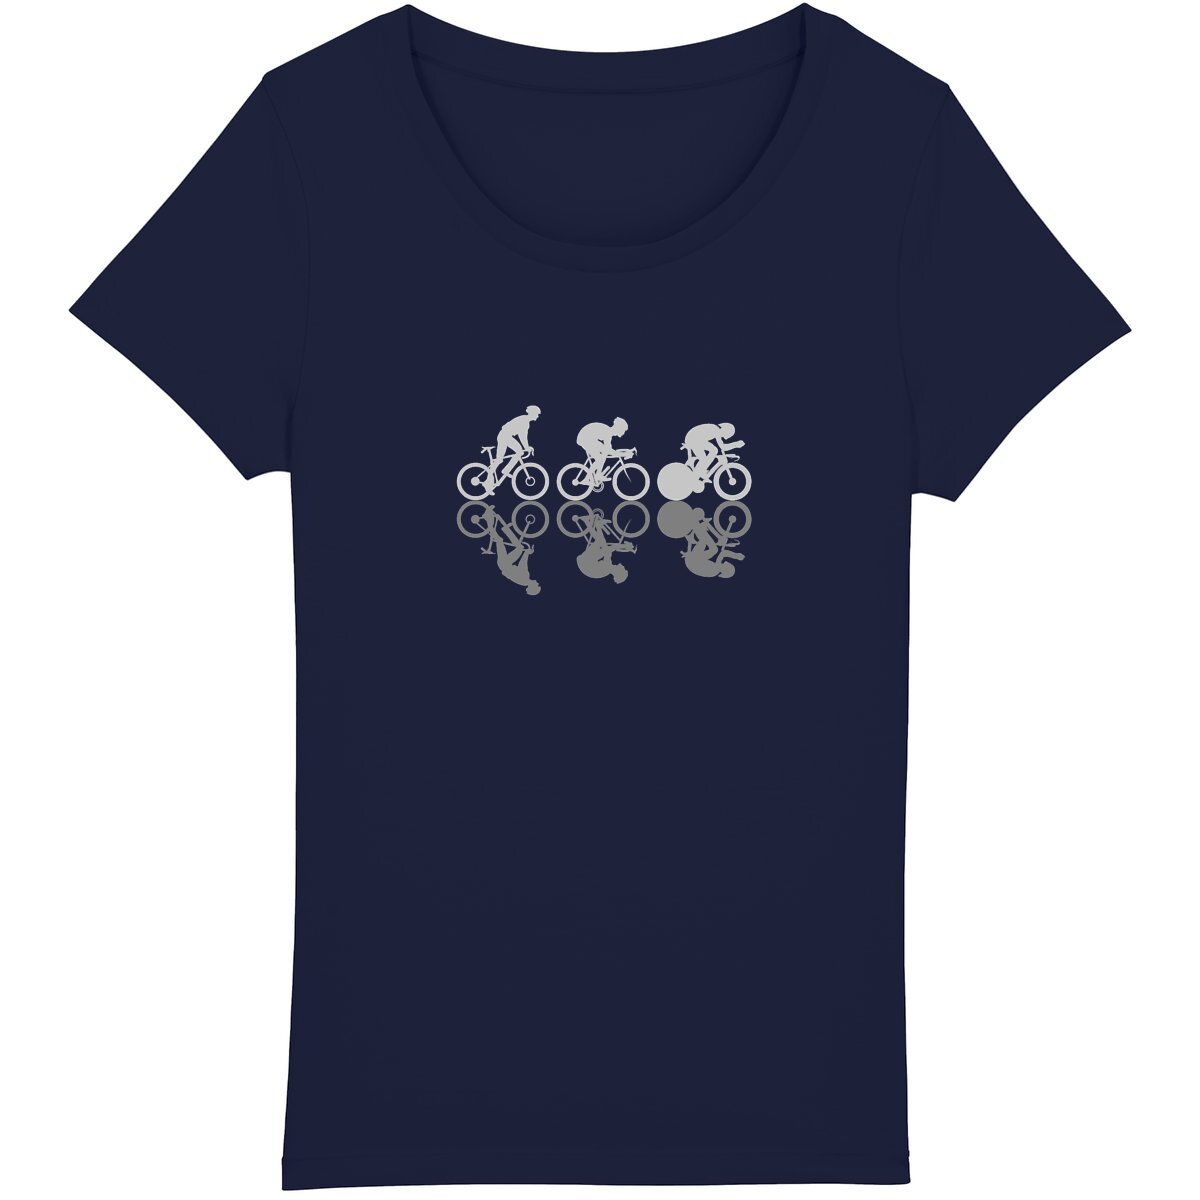 Tee-shirt cycliste femme éco-responsable et style moderne